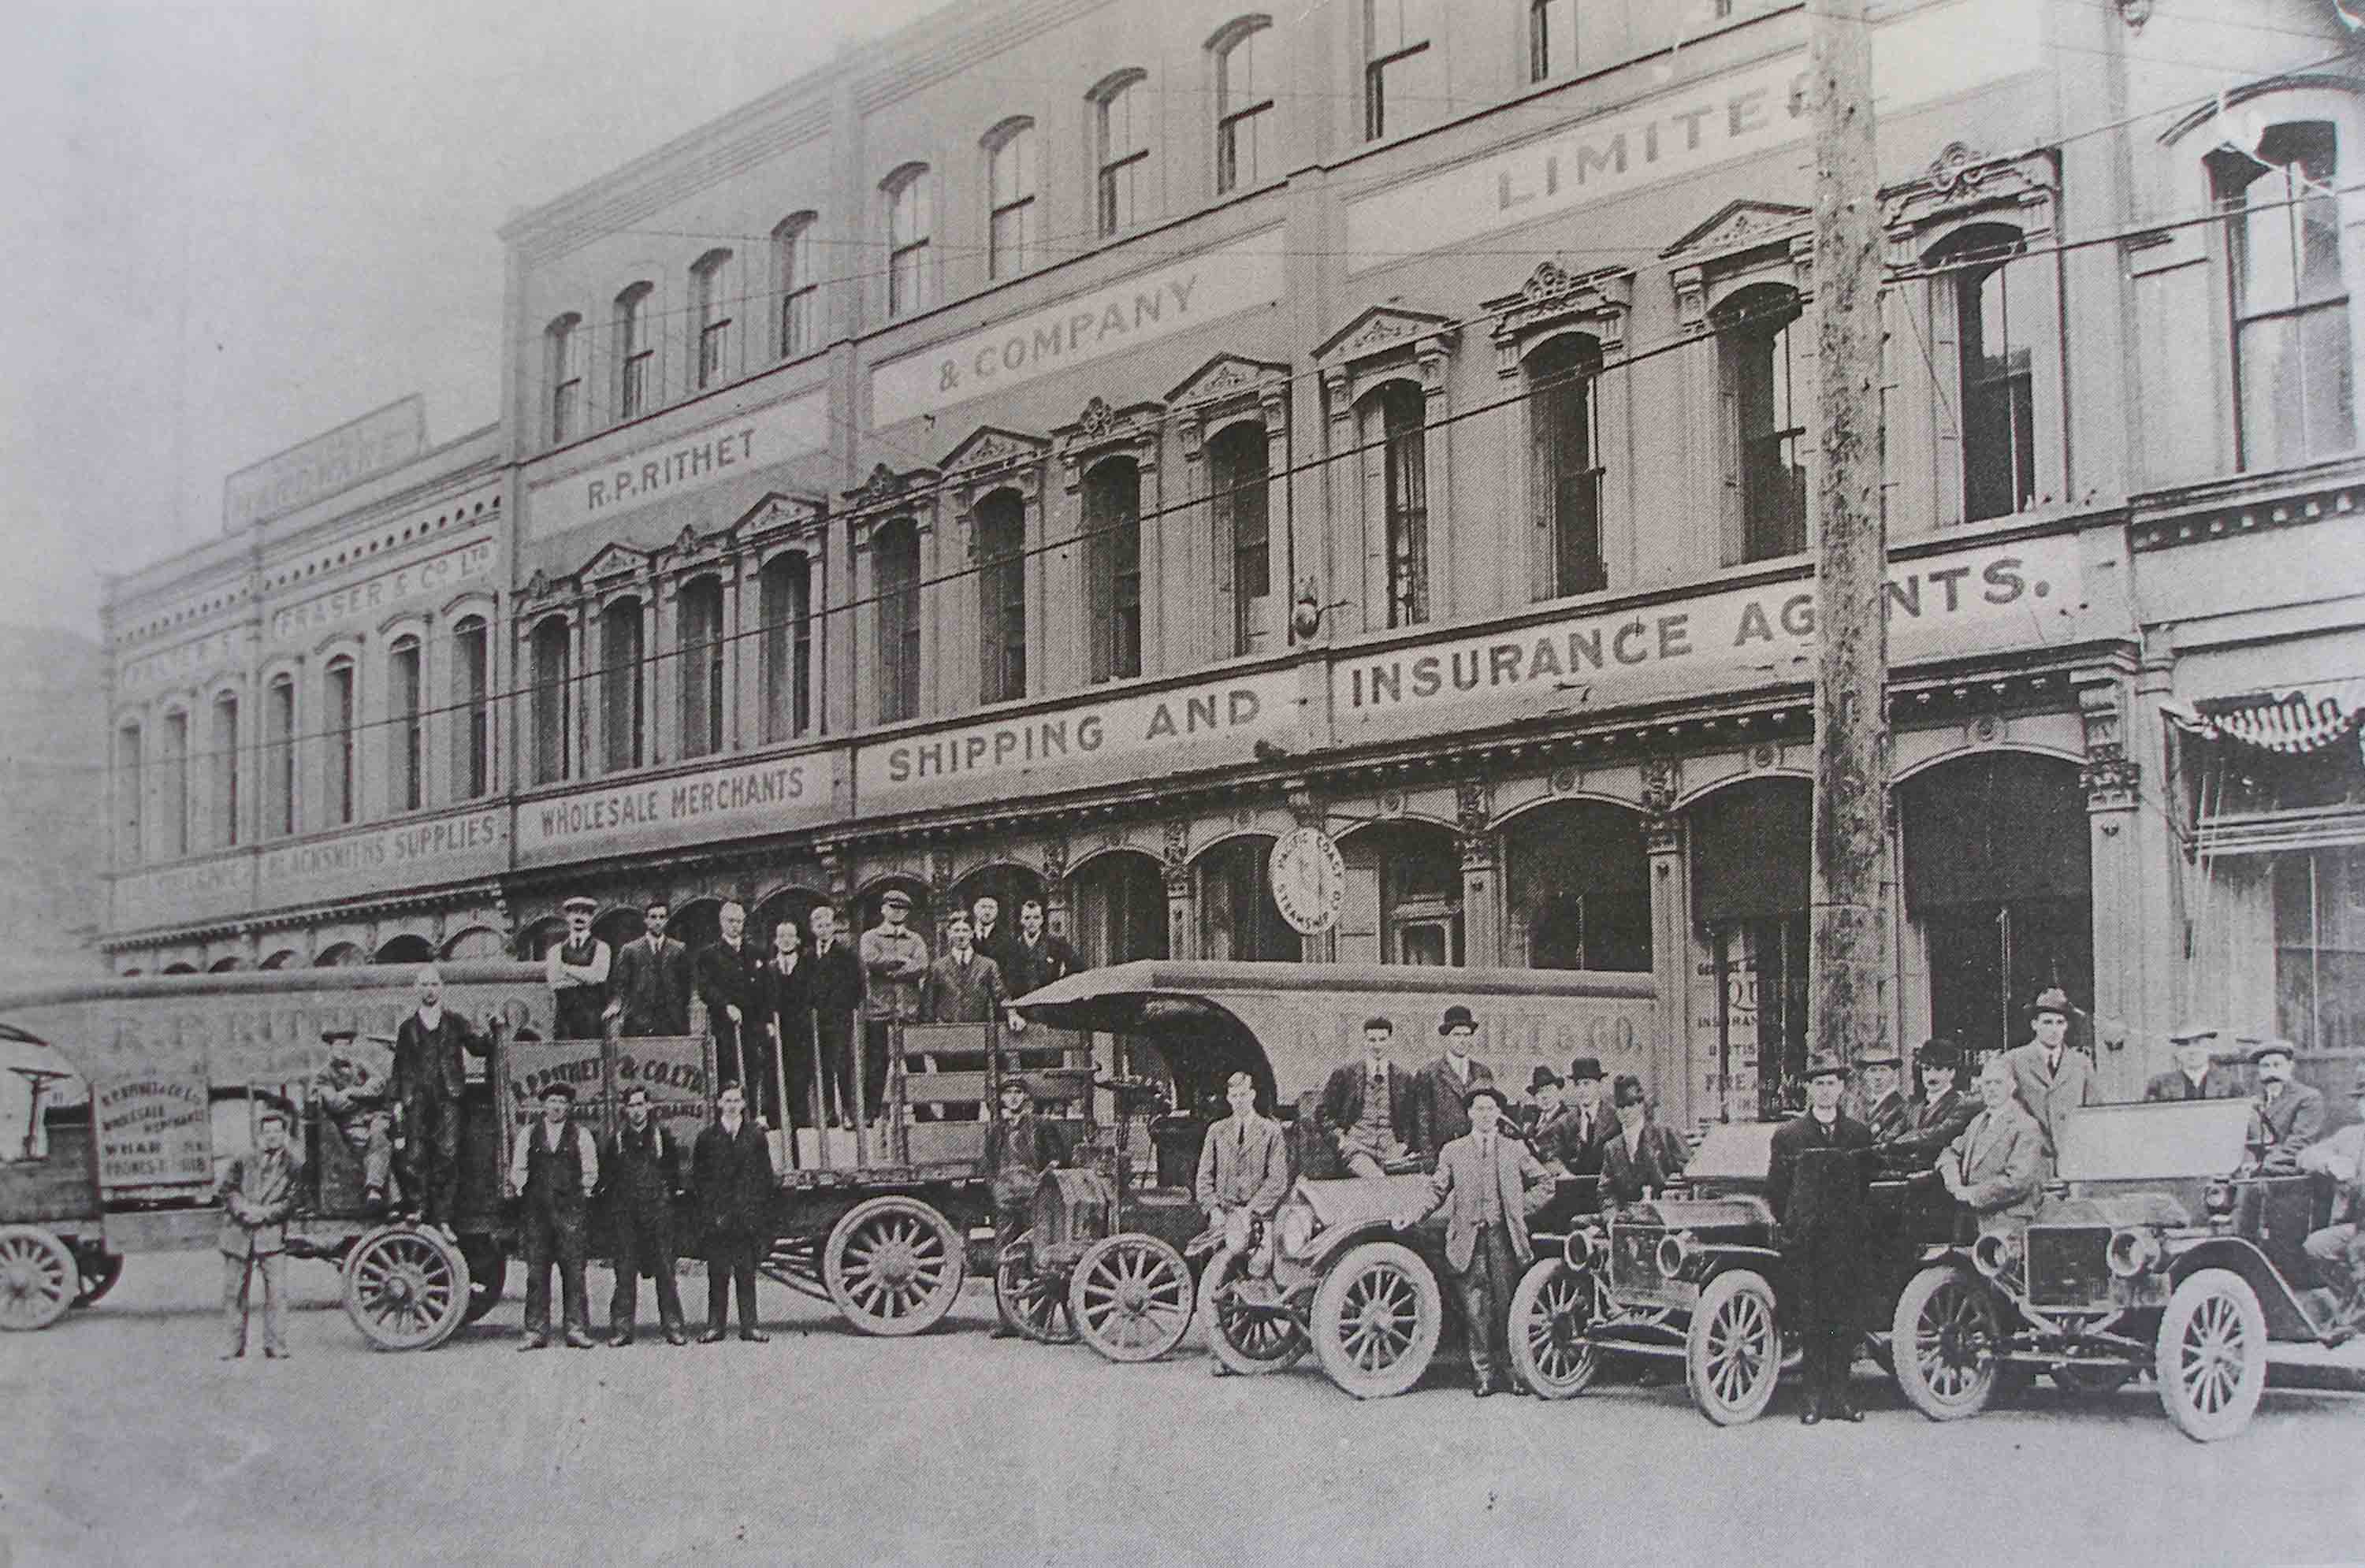 Rithet Building, Wharf Street, Victria, B.C., circa 1912